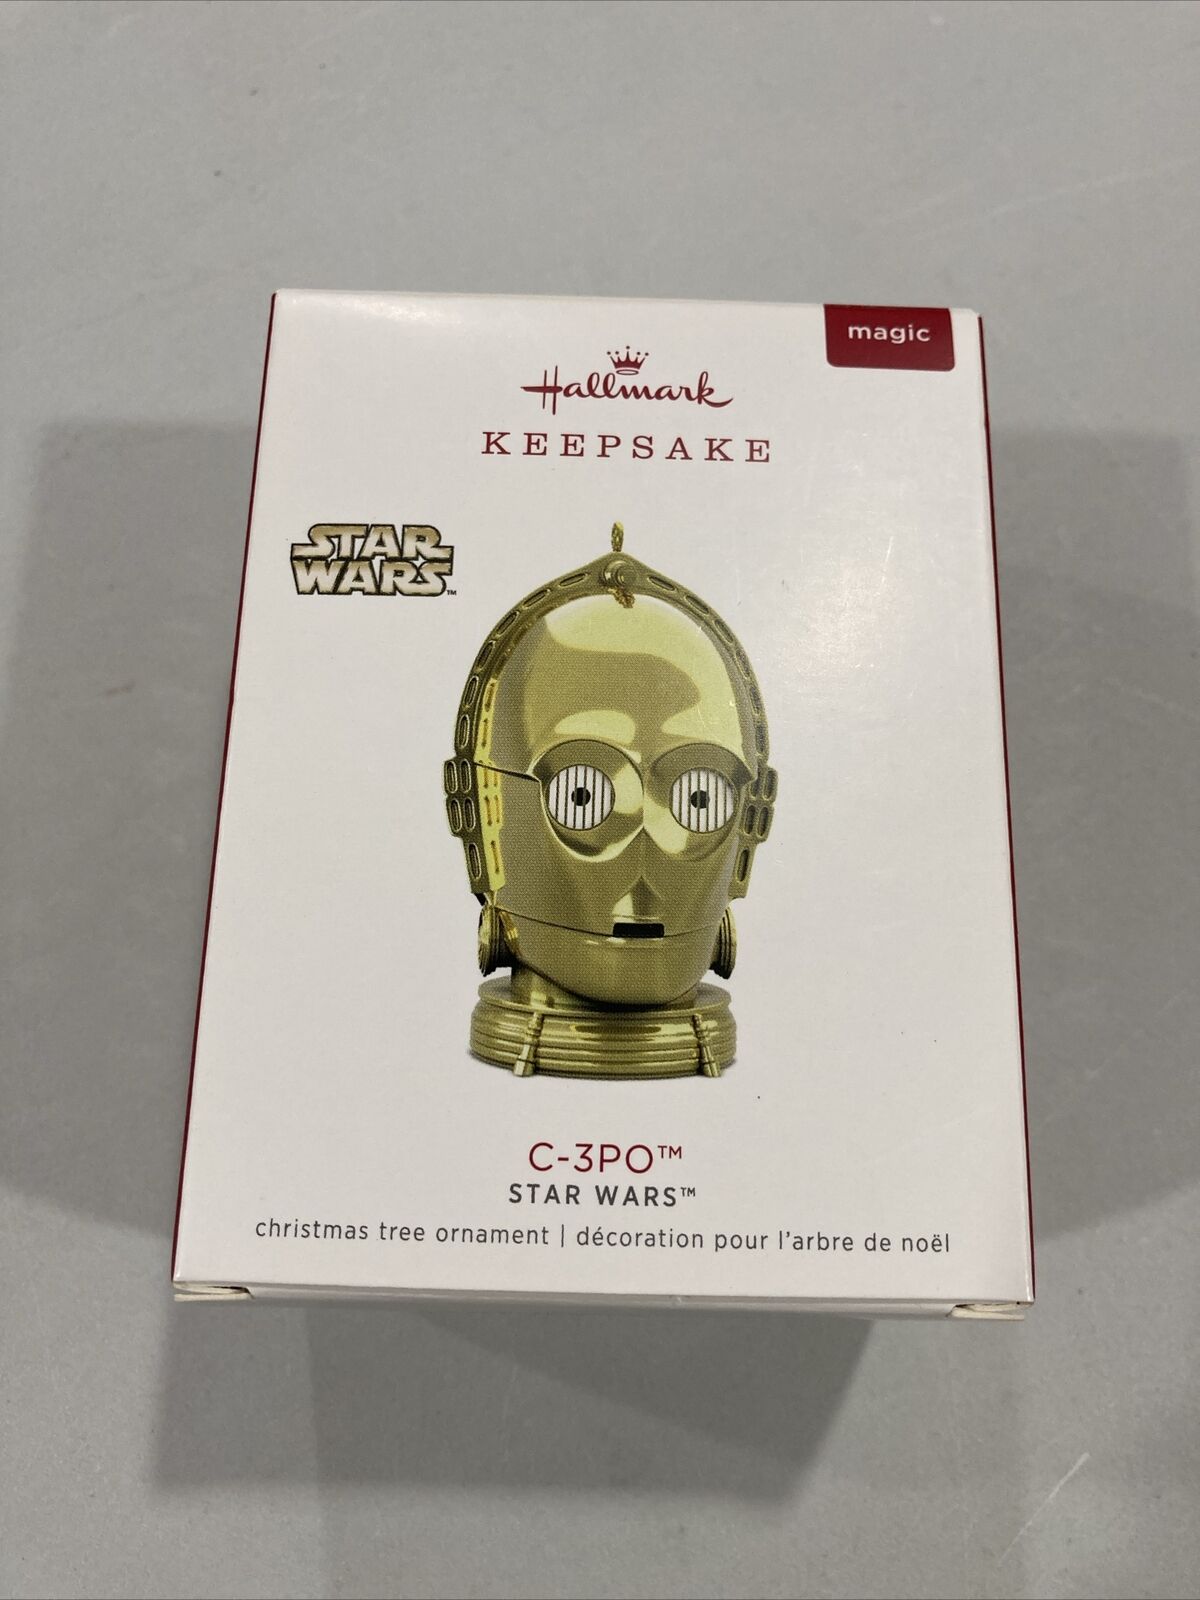 2018 Hallmark Star Wars C-3PO Keepsake Magic Light & Sound Ornament NIB